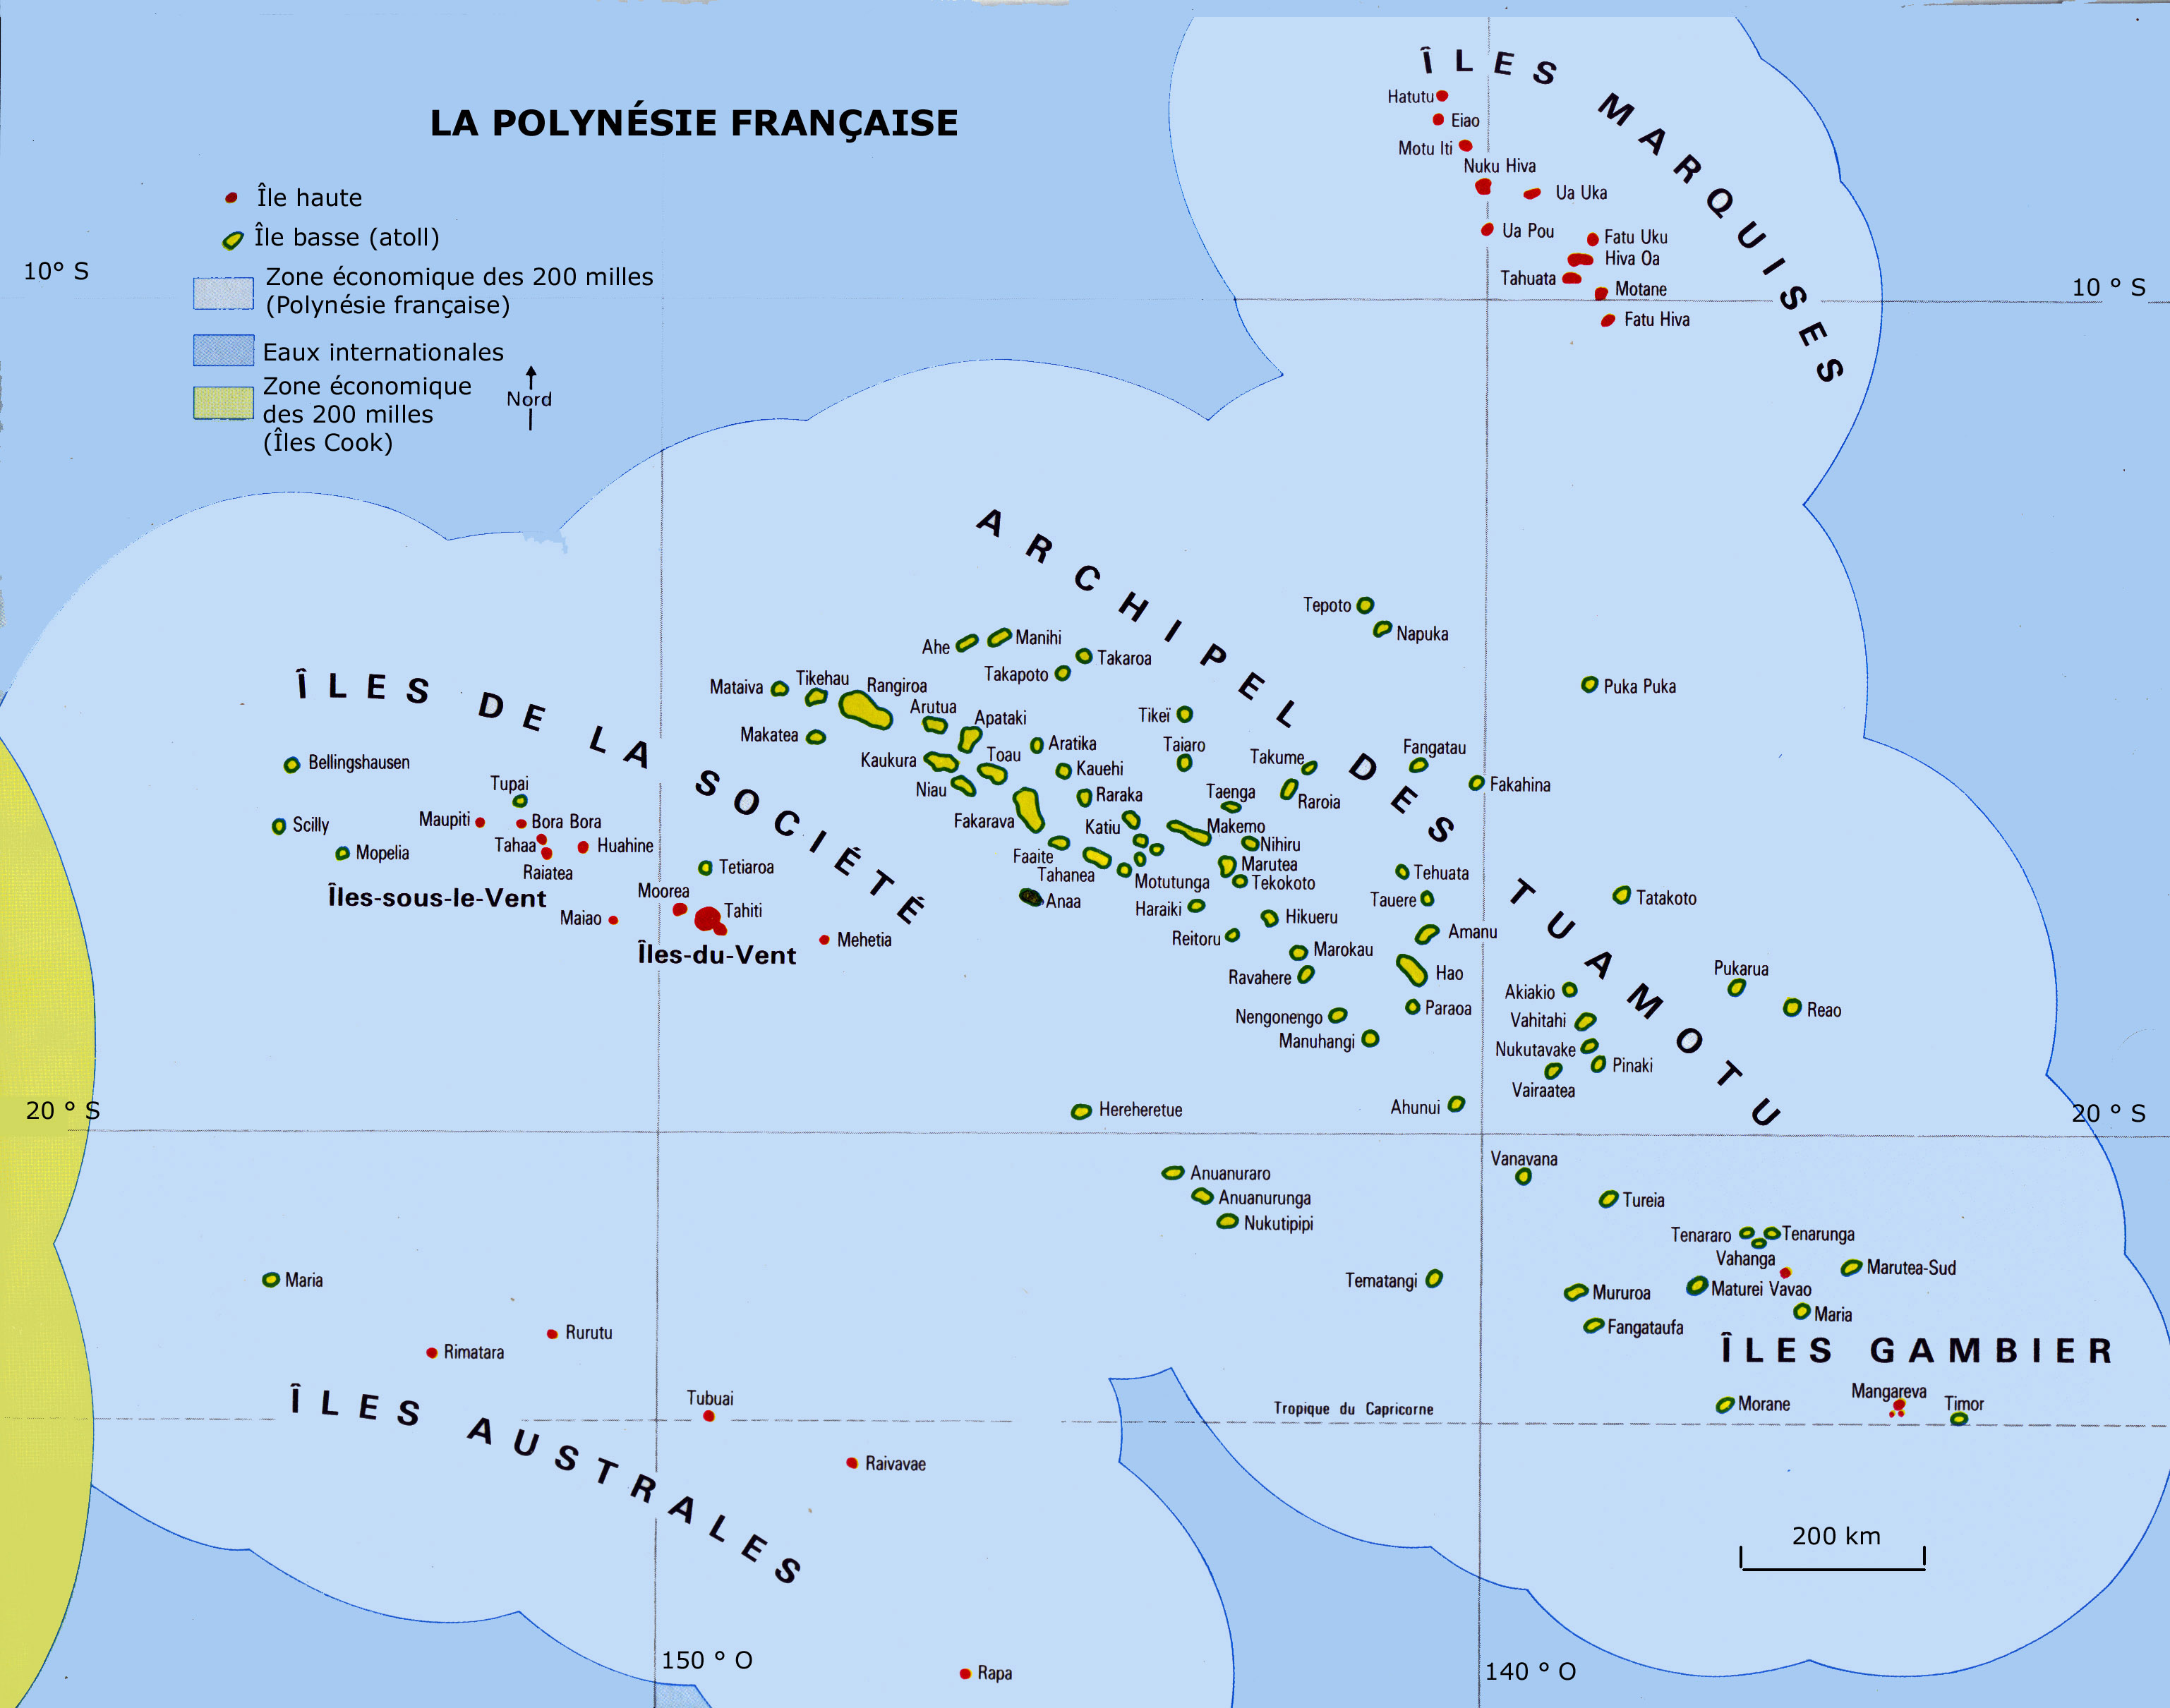 la polynesie francaise - Image